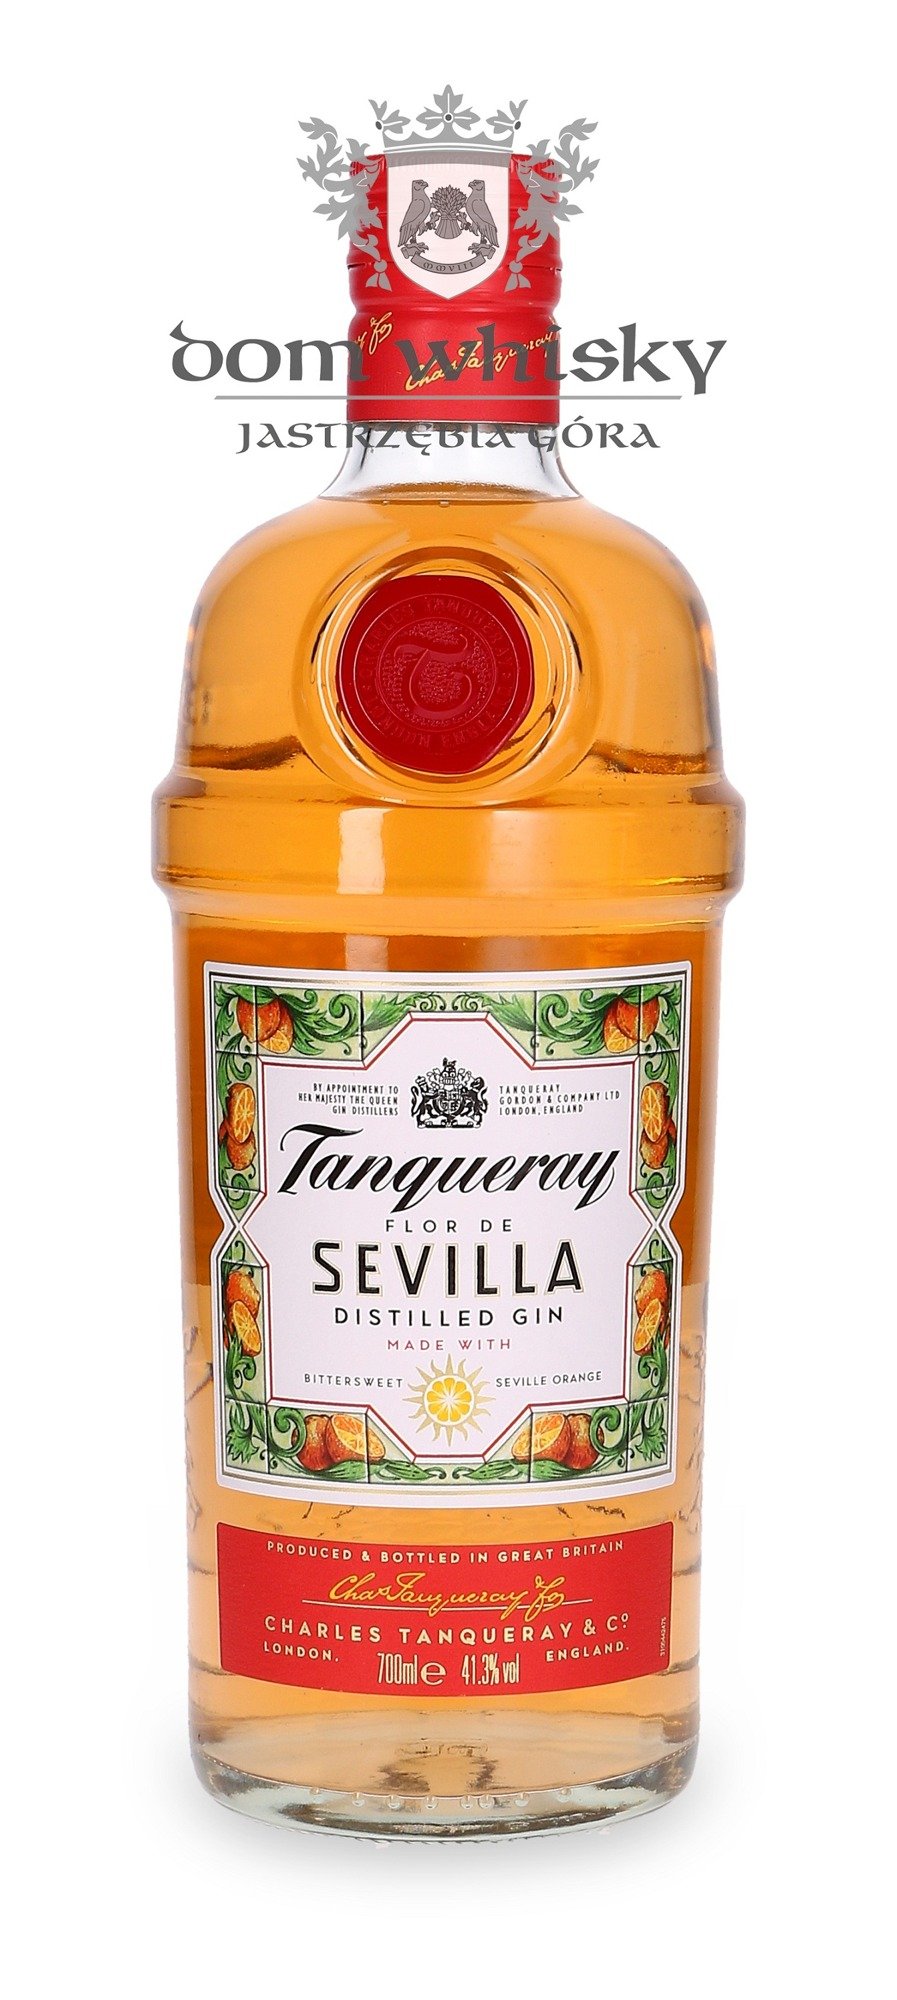 Tanqueray Flor de Sevilla Whisky Dom 0,7l | / Gin Distilled 41,3